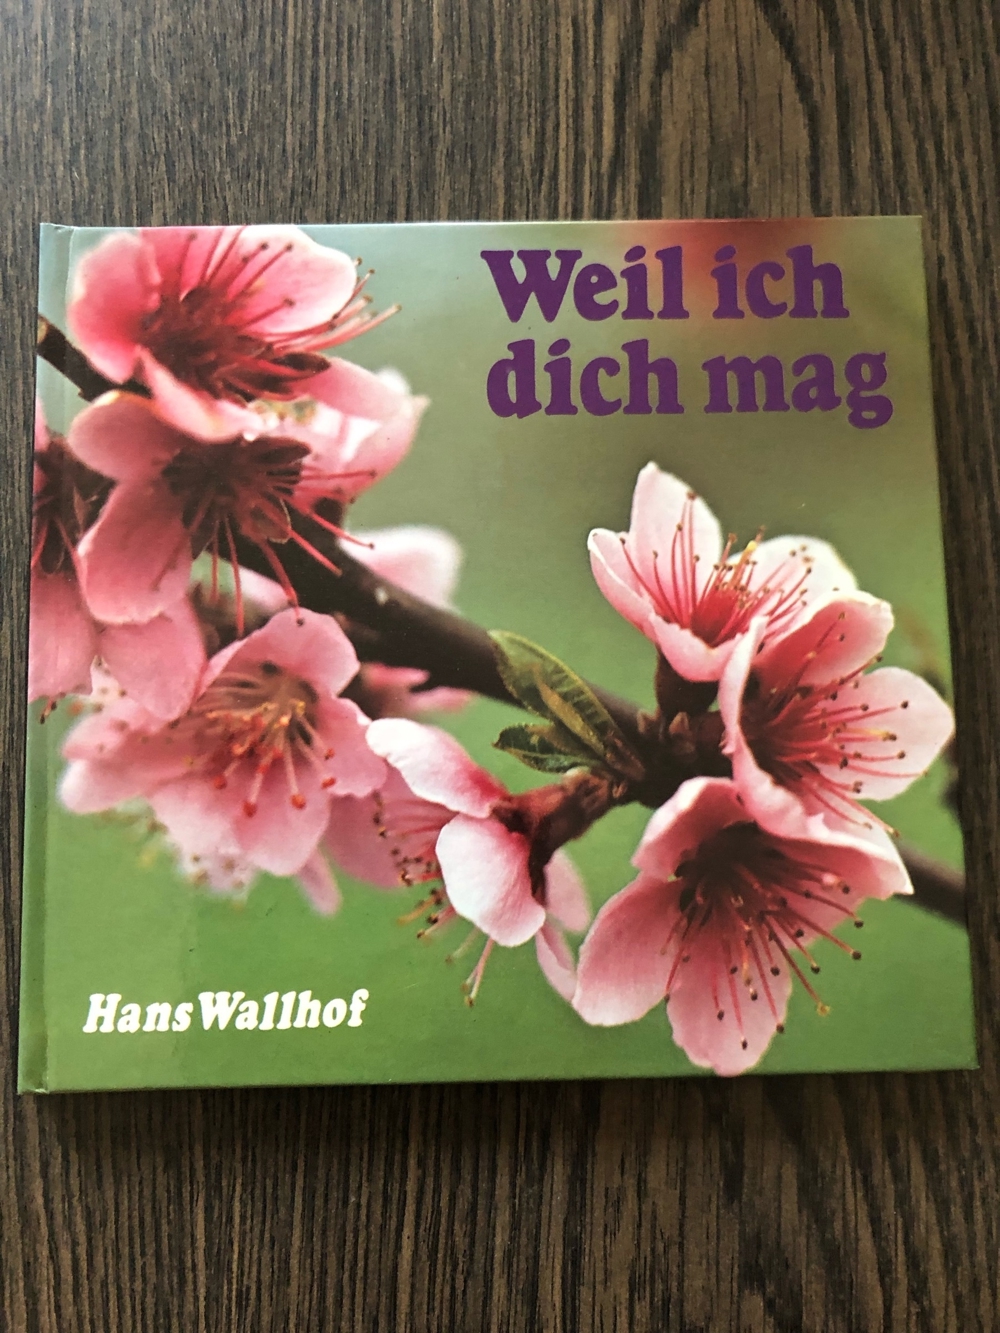 Weil ich dich mag, Hans Wallhof